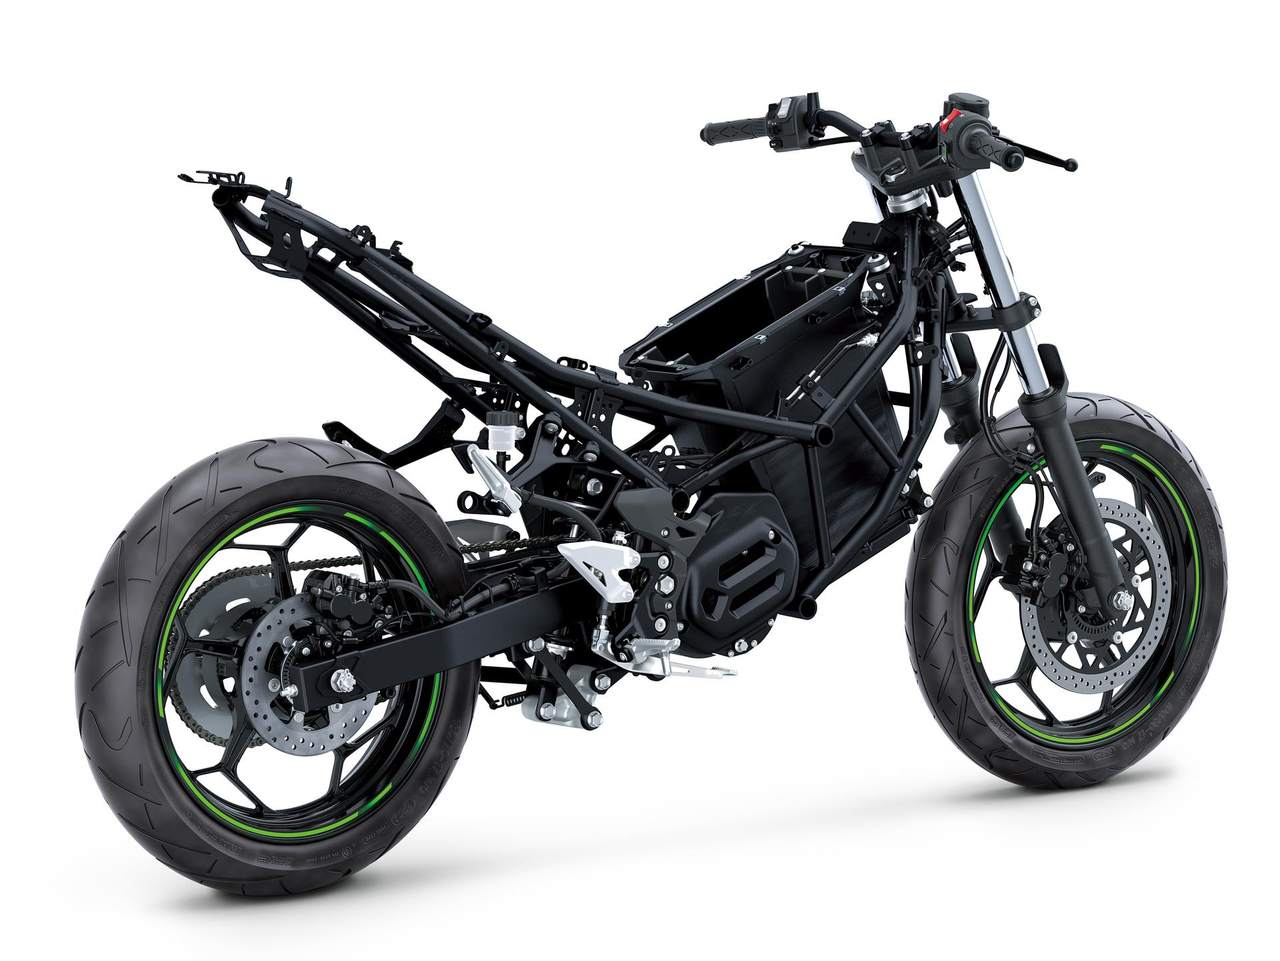 Solid Build: Kawasaki-Designed Motorcycle Chassis